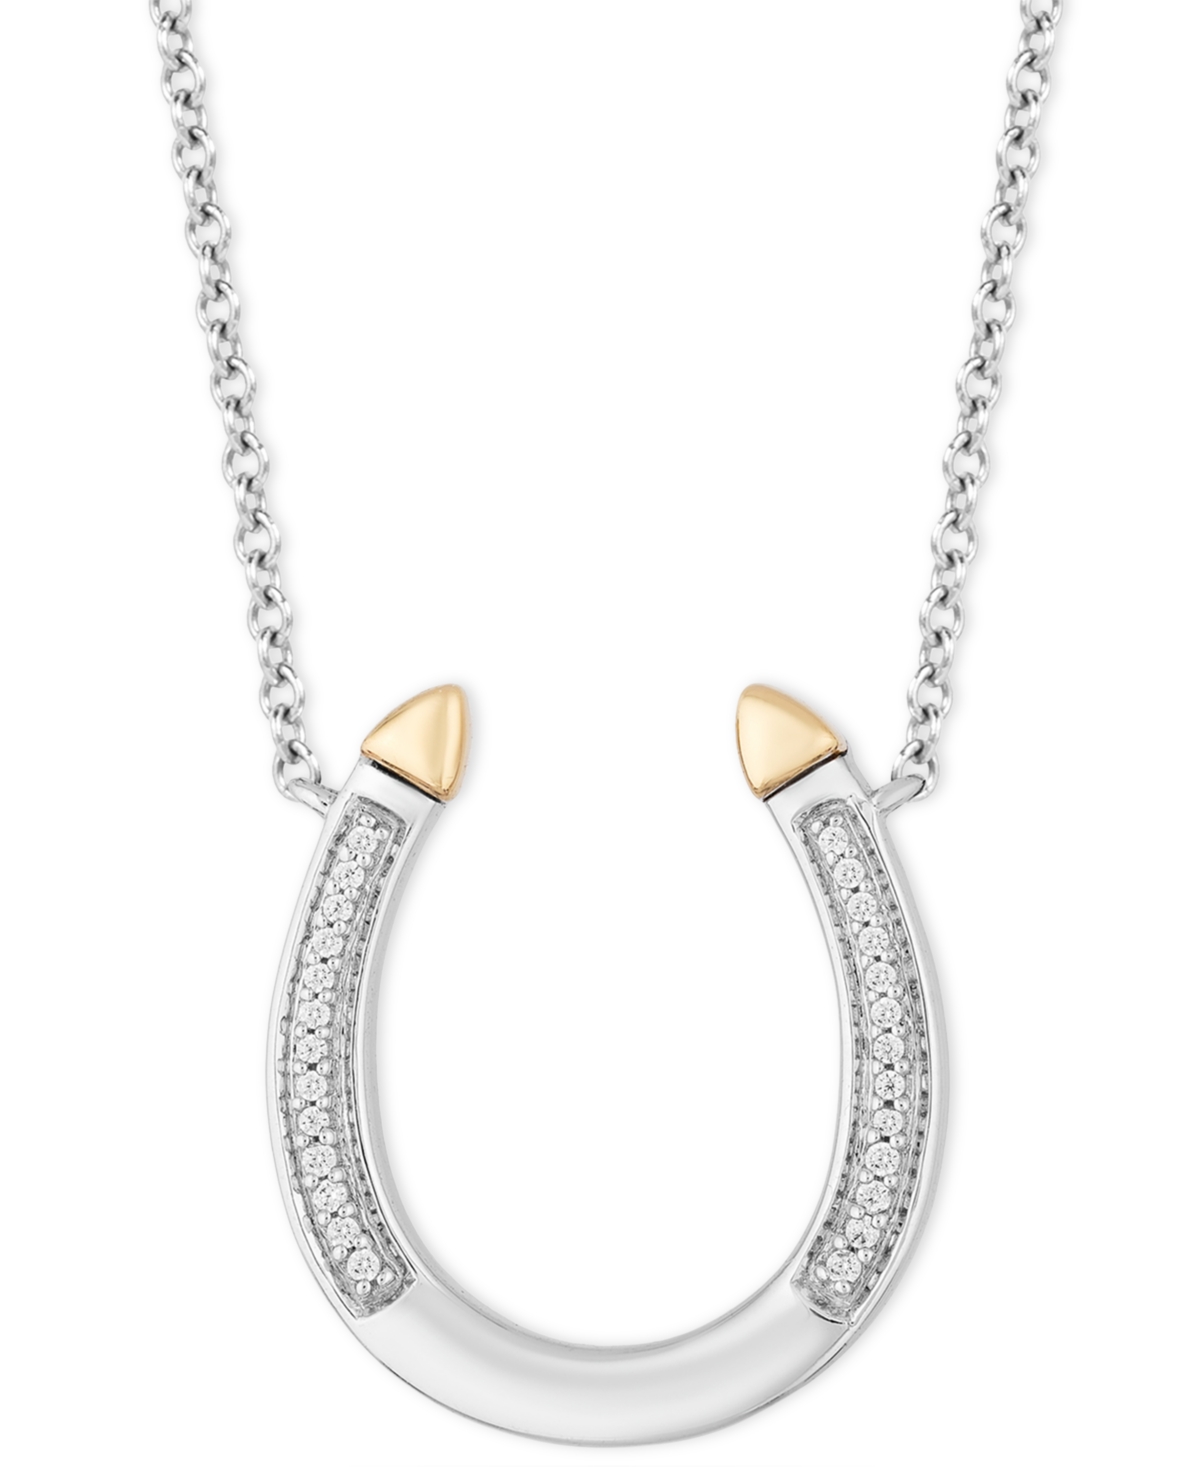 Hallmark Diamonds Tokens by Hallmark Diamonds Horseshoe Luck pendant (1/20 ct. t.w.) in Sterling Silver & 14k Gold, 16" + 2" extender